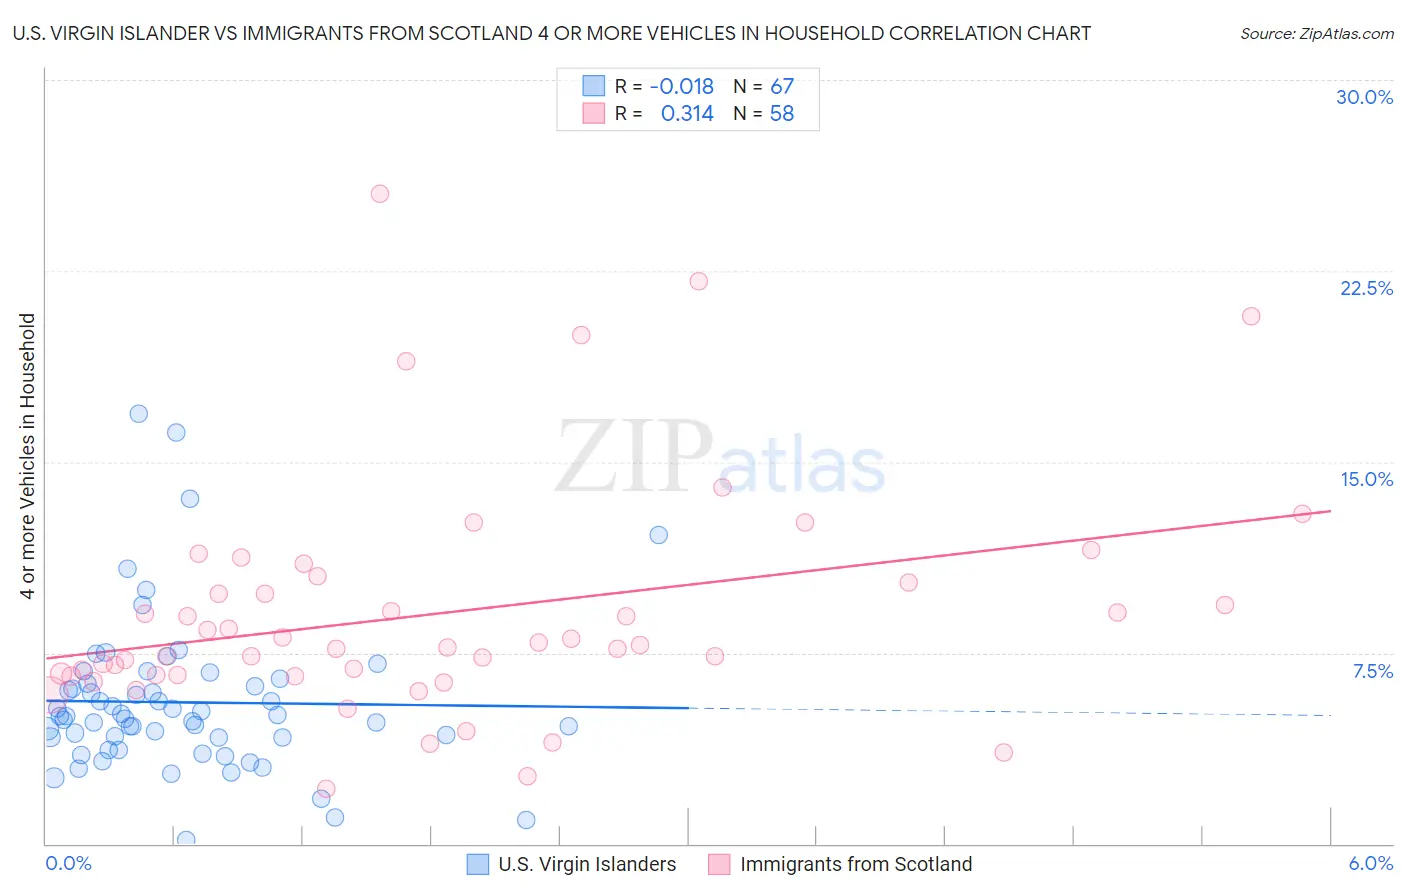 U.S. Virgin Islander vs Immigrants from Scotland 4 or more Vehicles in Household